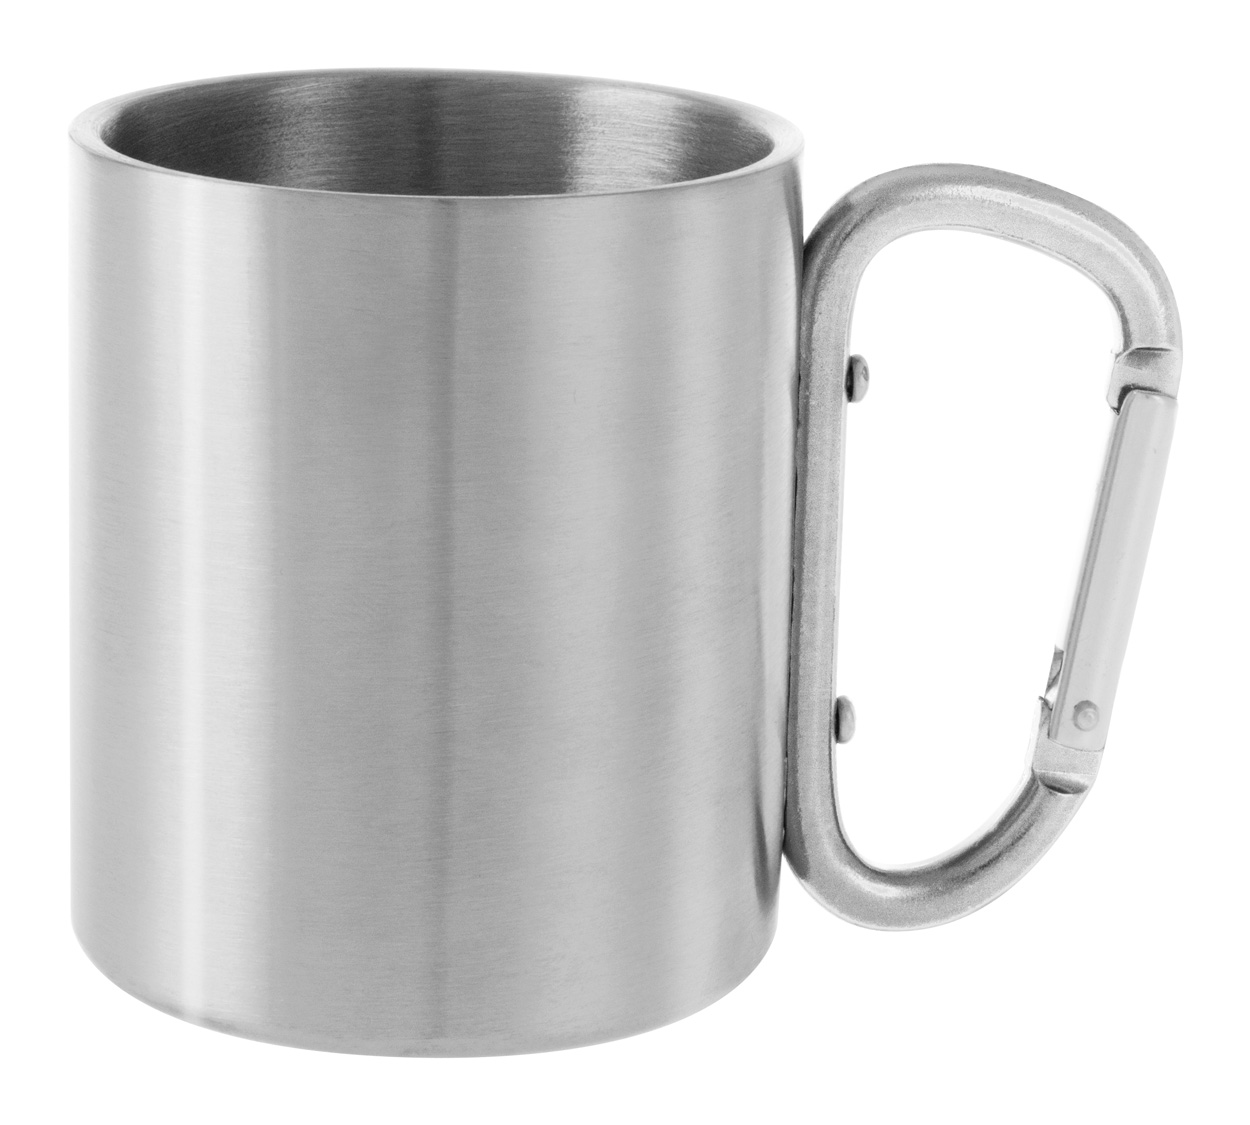 Bastic stainless steel mug - silver